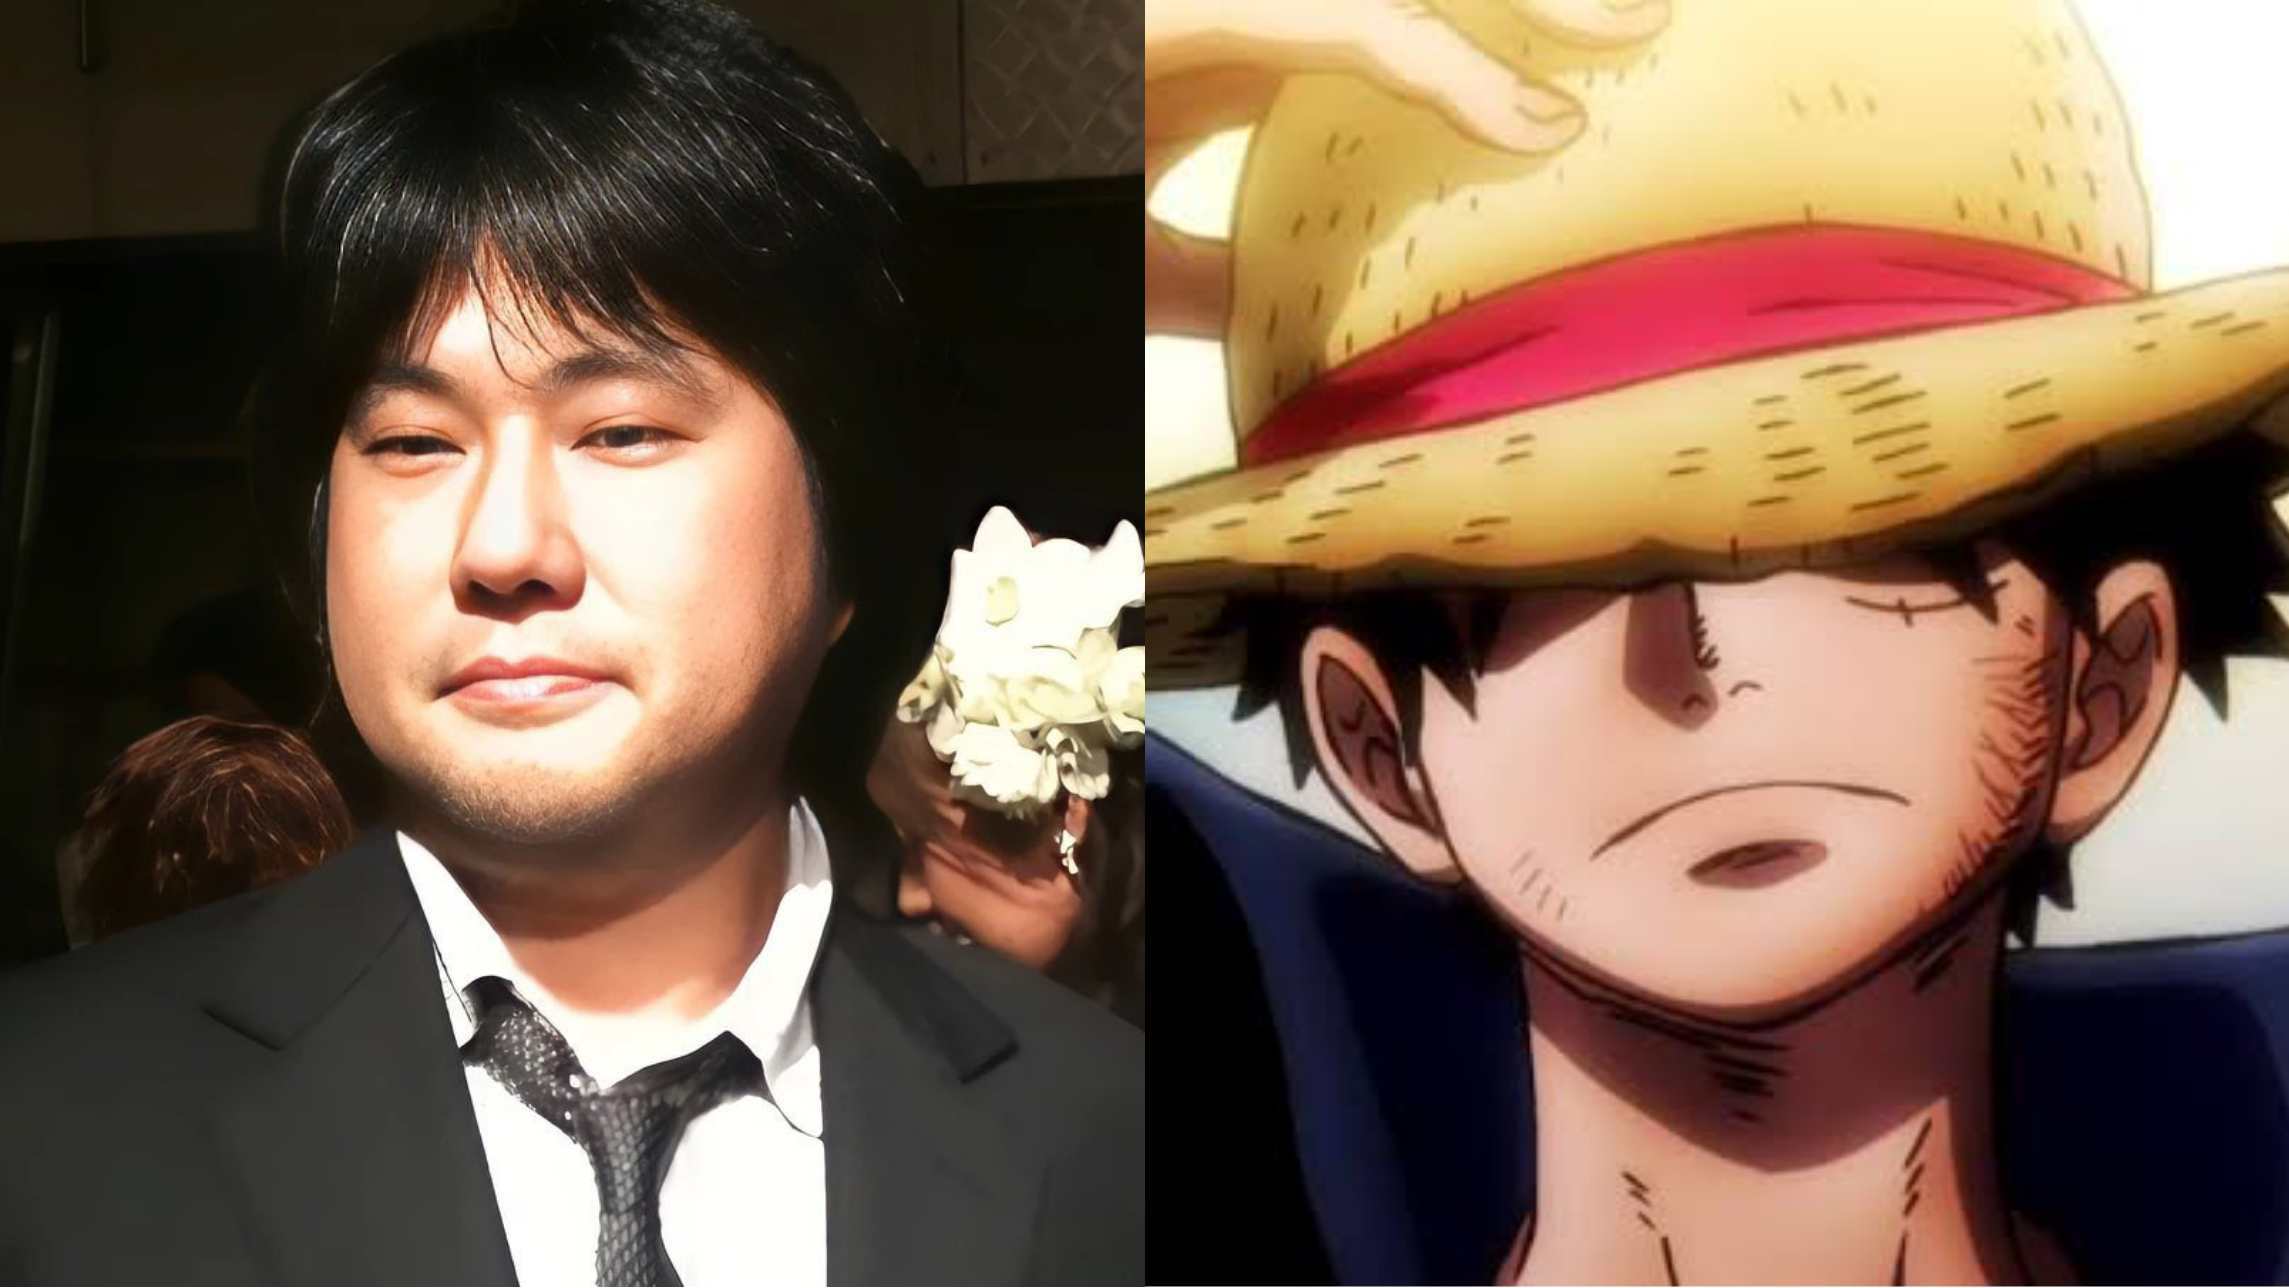 One Piece Mangaka "Oda Eiichiro" Shares his Condolences to Mourn the Loss of Akira Toriyama